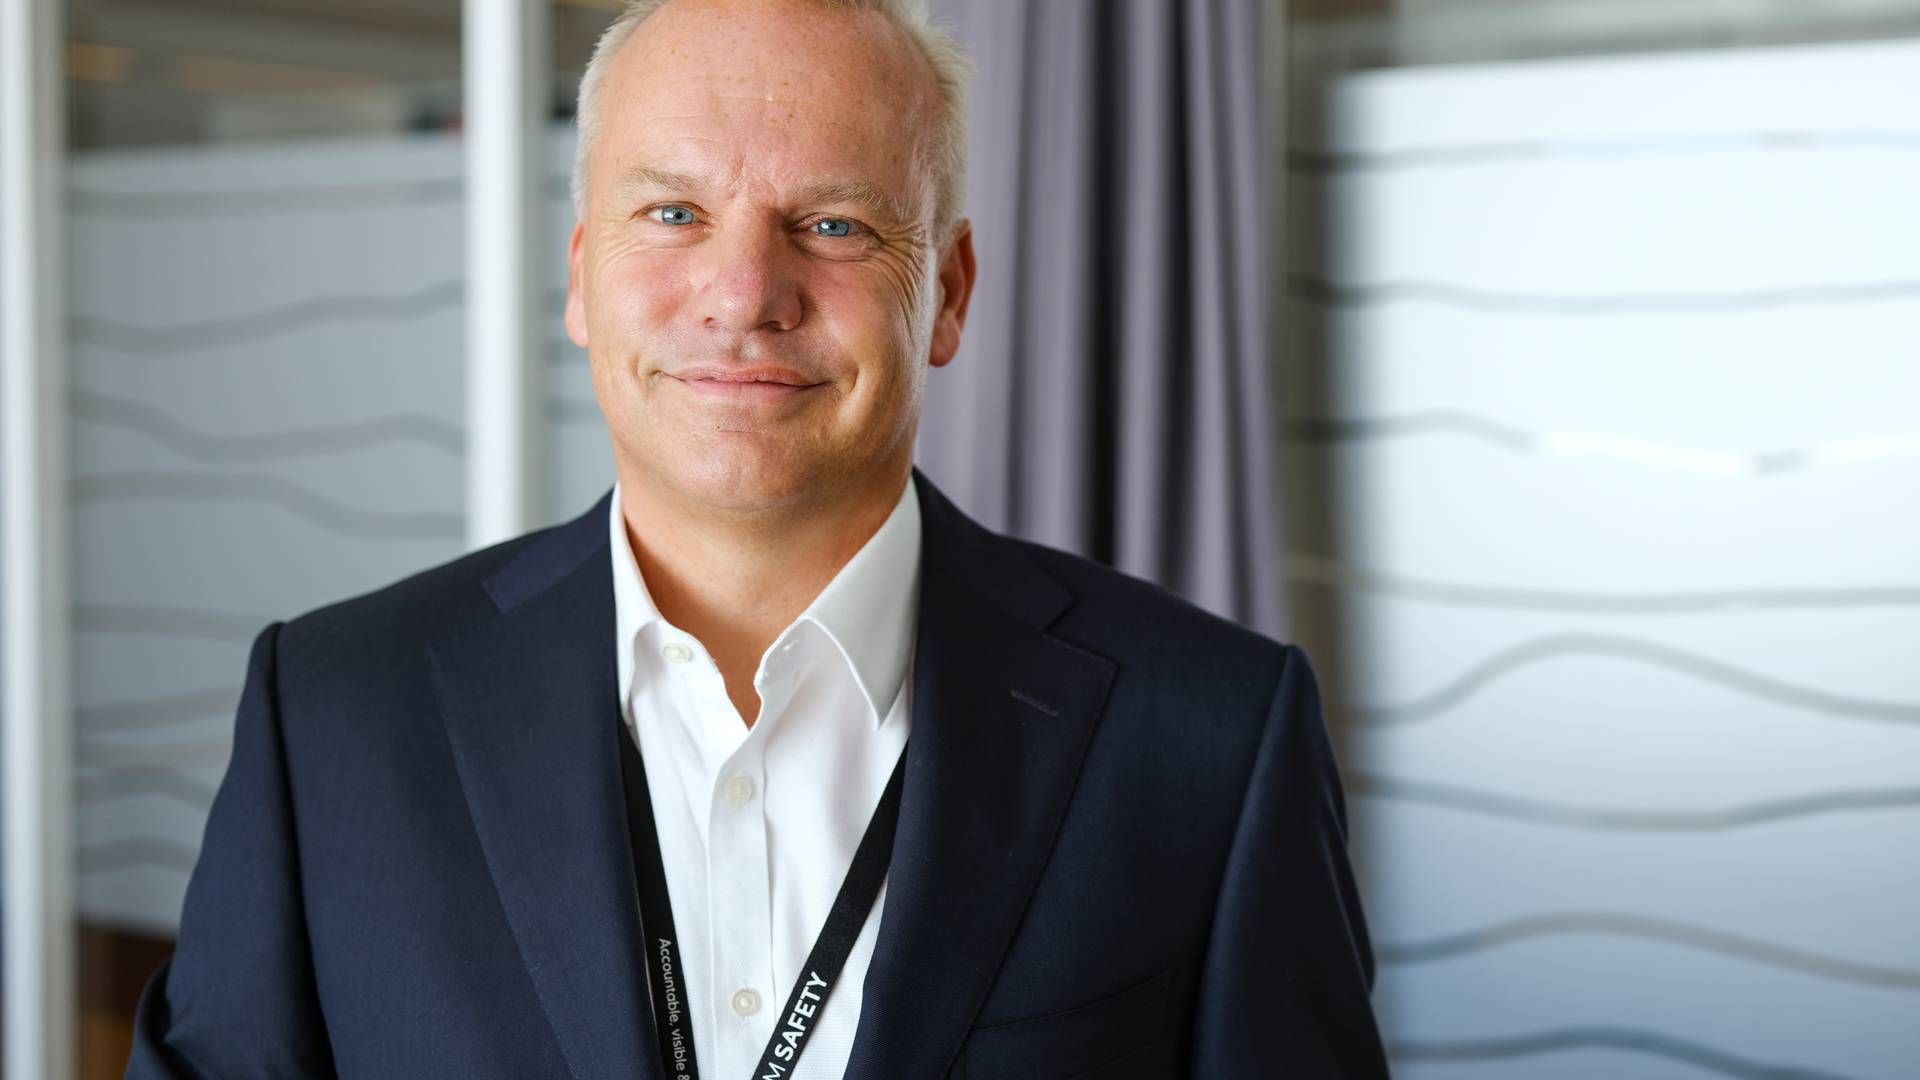 Anders Opedal, CEO of Equinor. | Photo: Pr / Equinor / Ole Jørgen Bratland